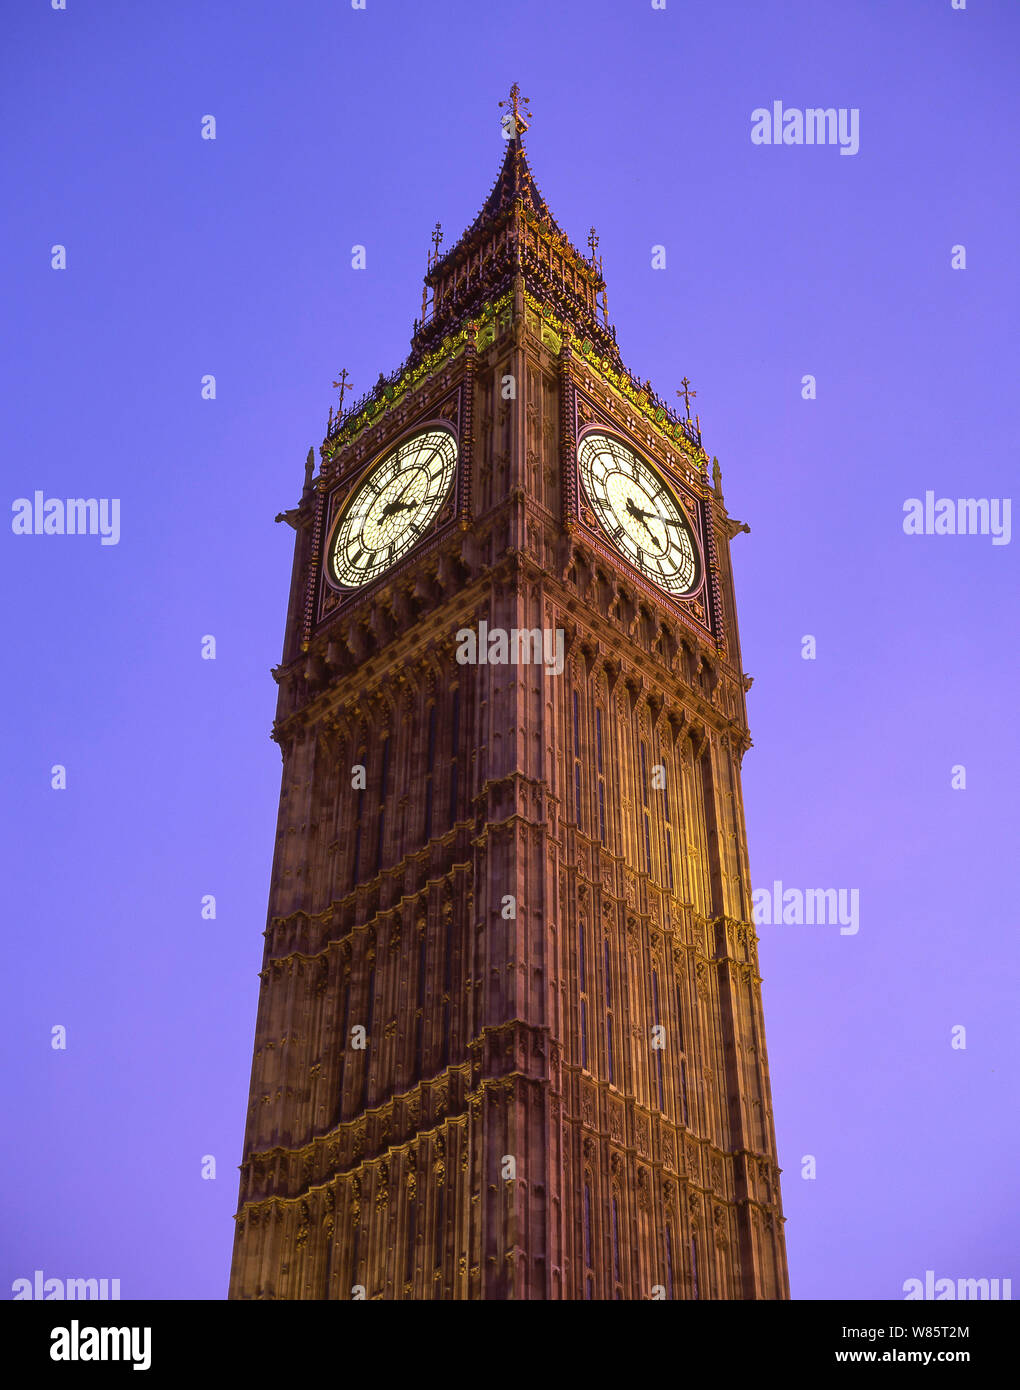 Big Ben clock (Elizabeth Tower) at dusk, City of Westminster, Greater London, England, United Kingdom Stock Photo